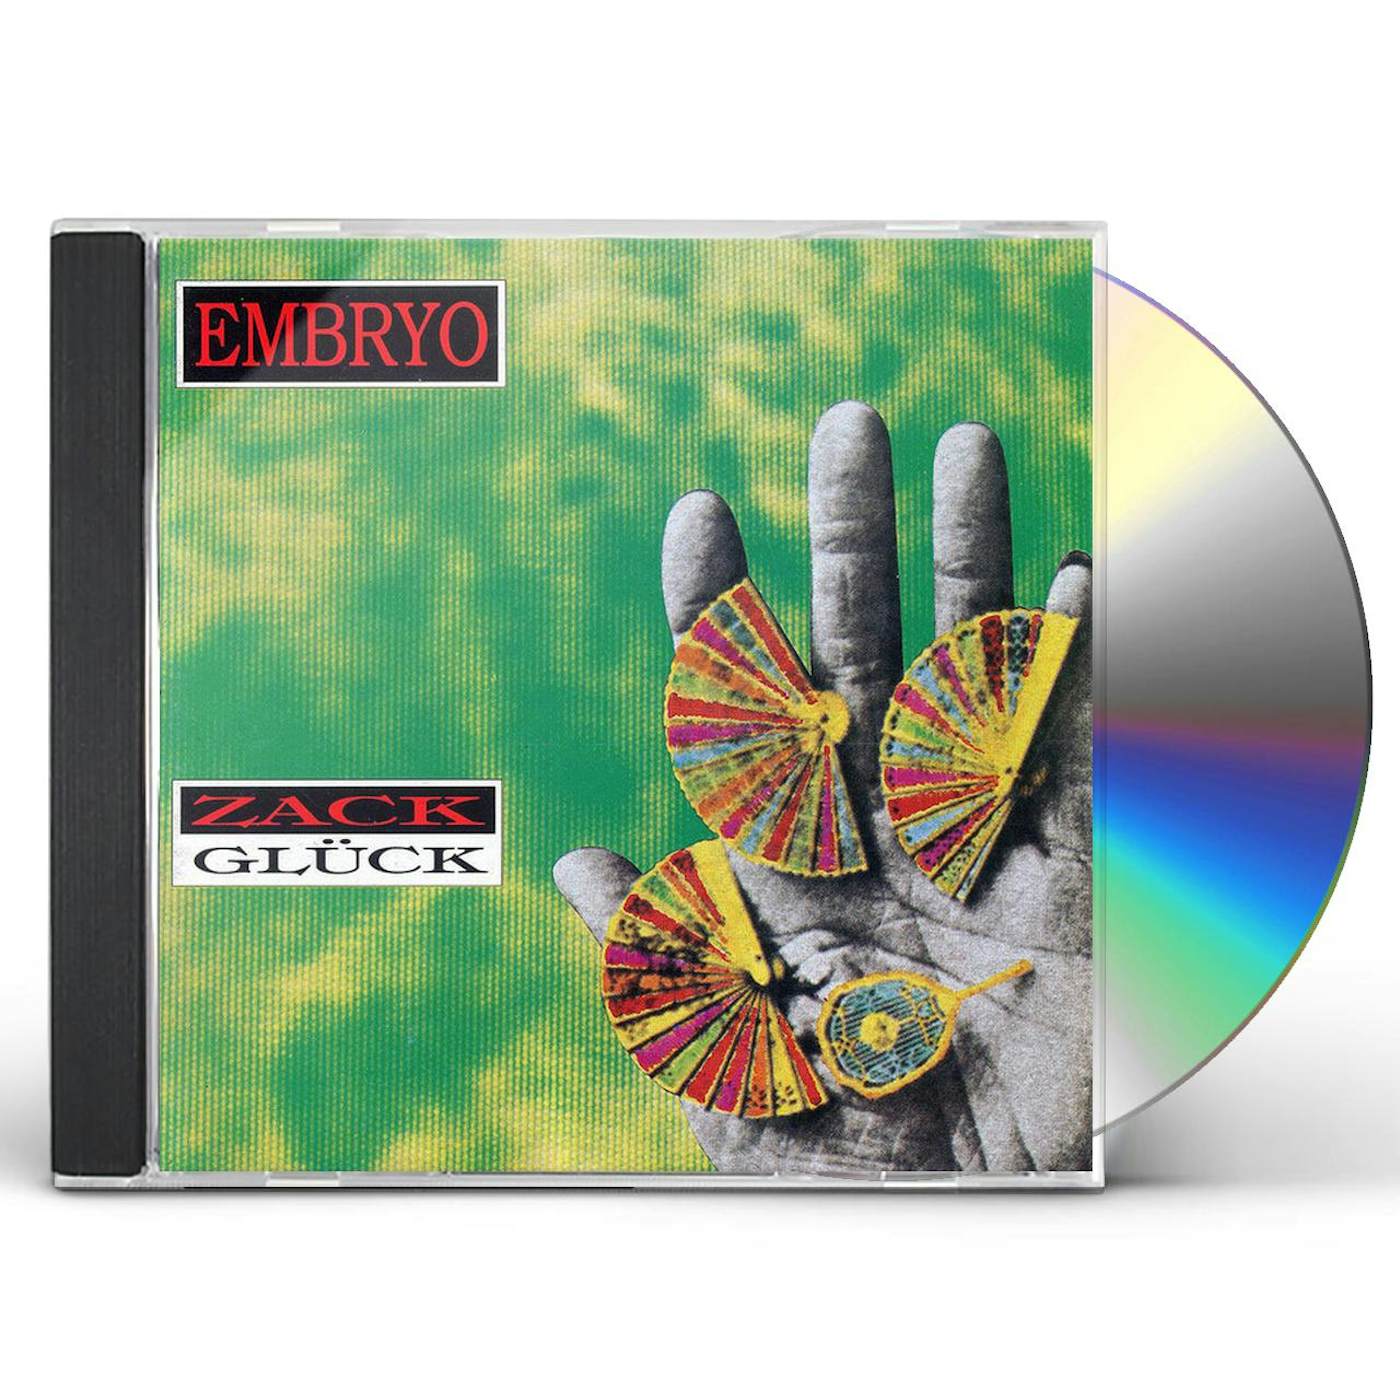 Embryo ZACK GLUCK CD